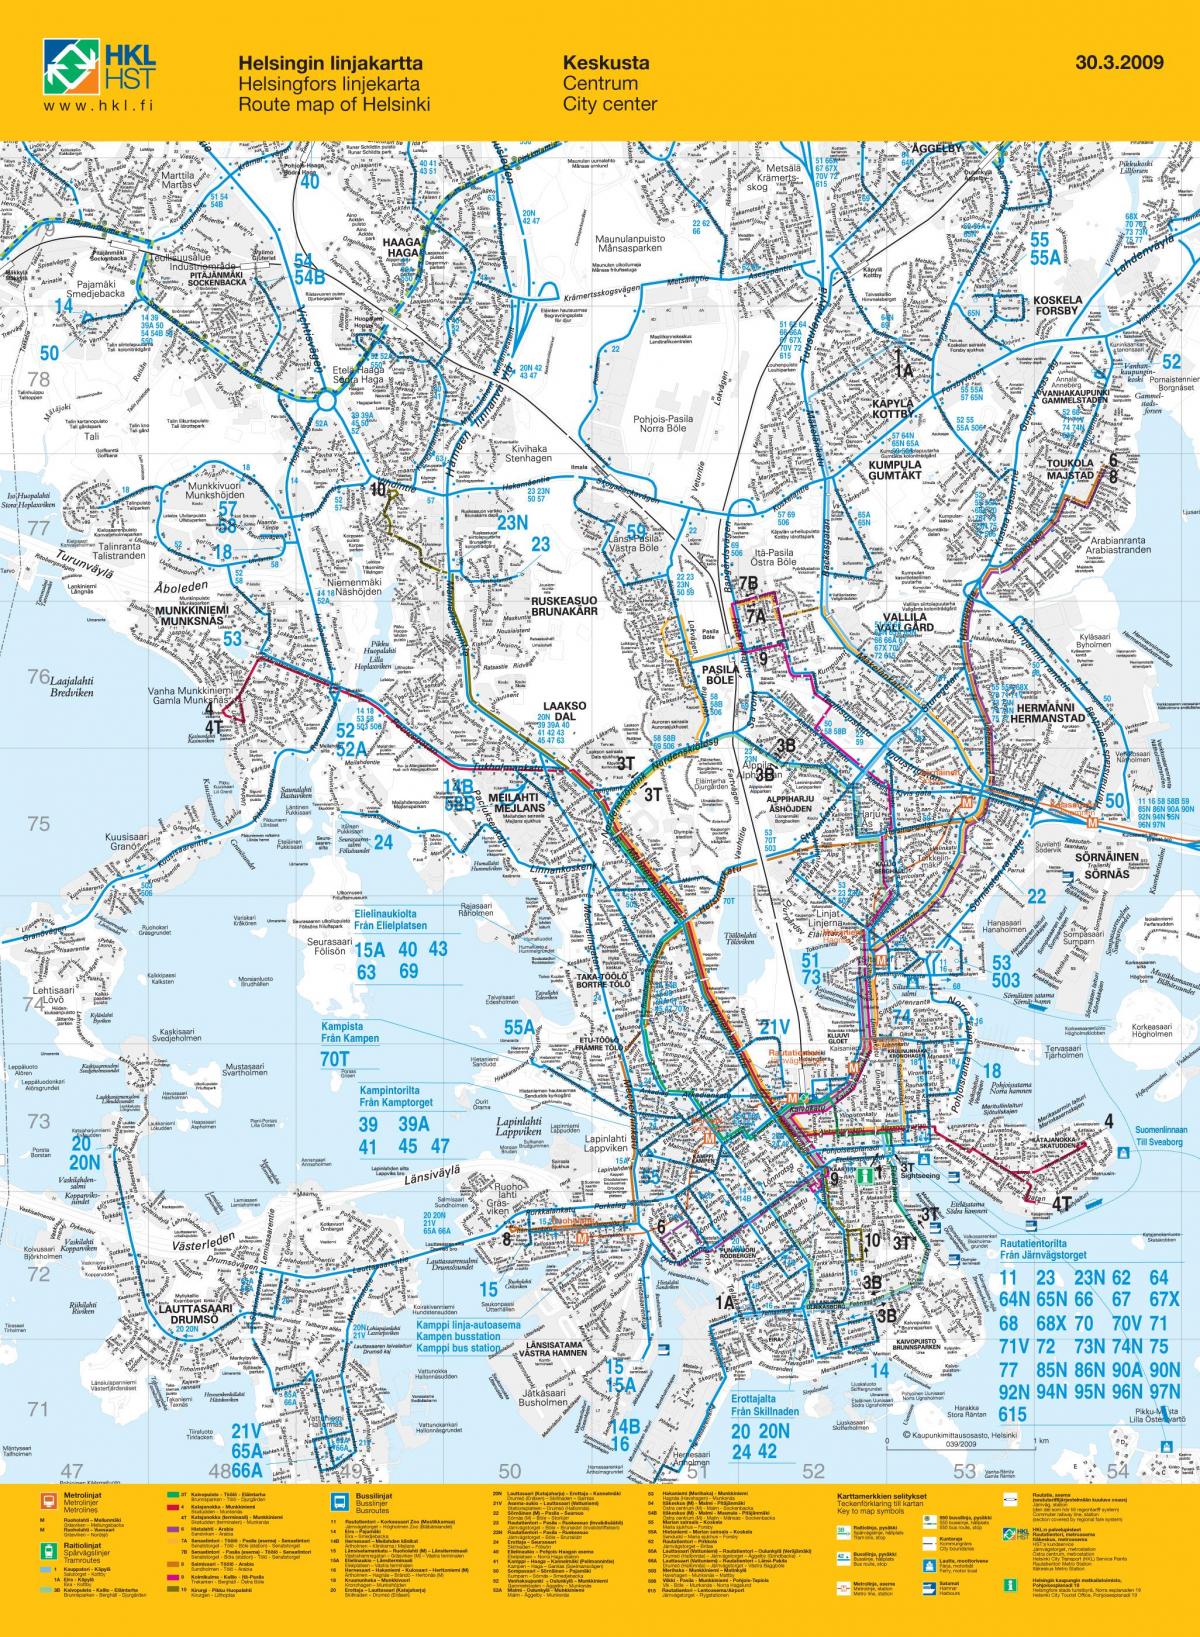 Helsinki bus station map